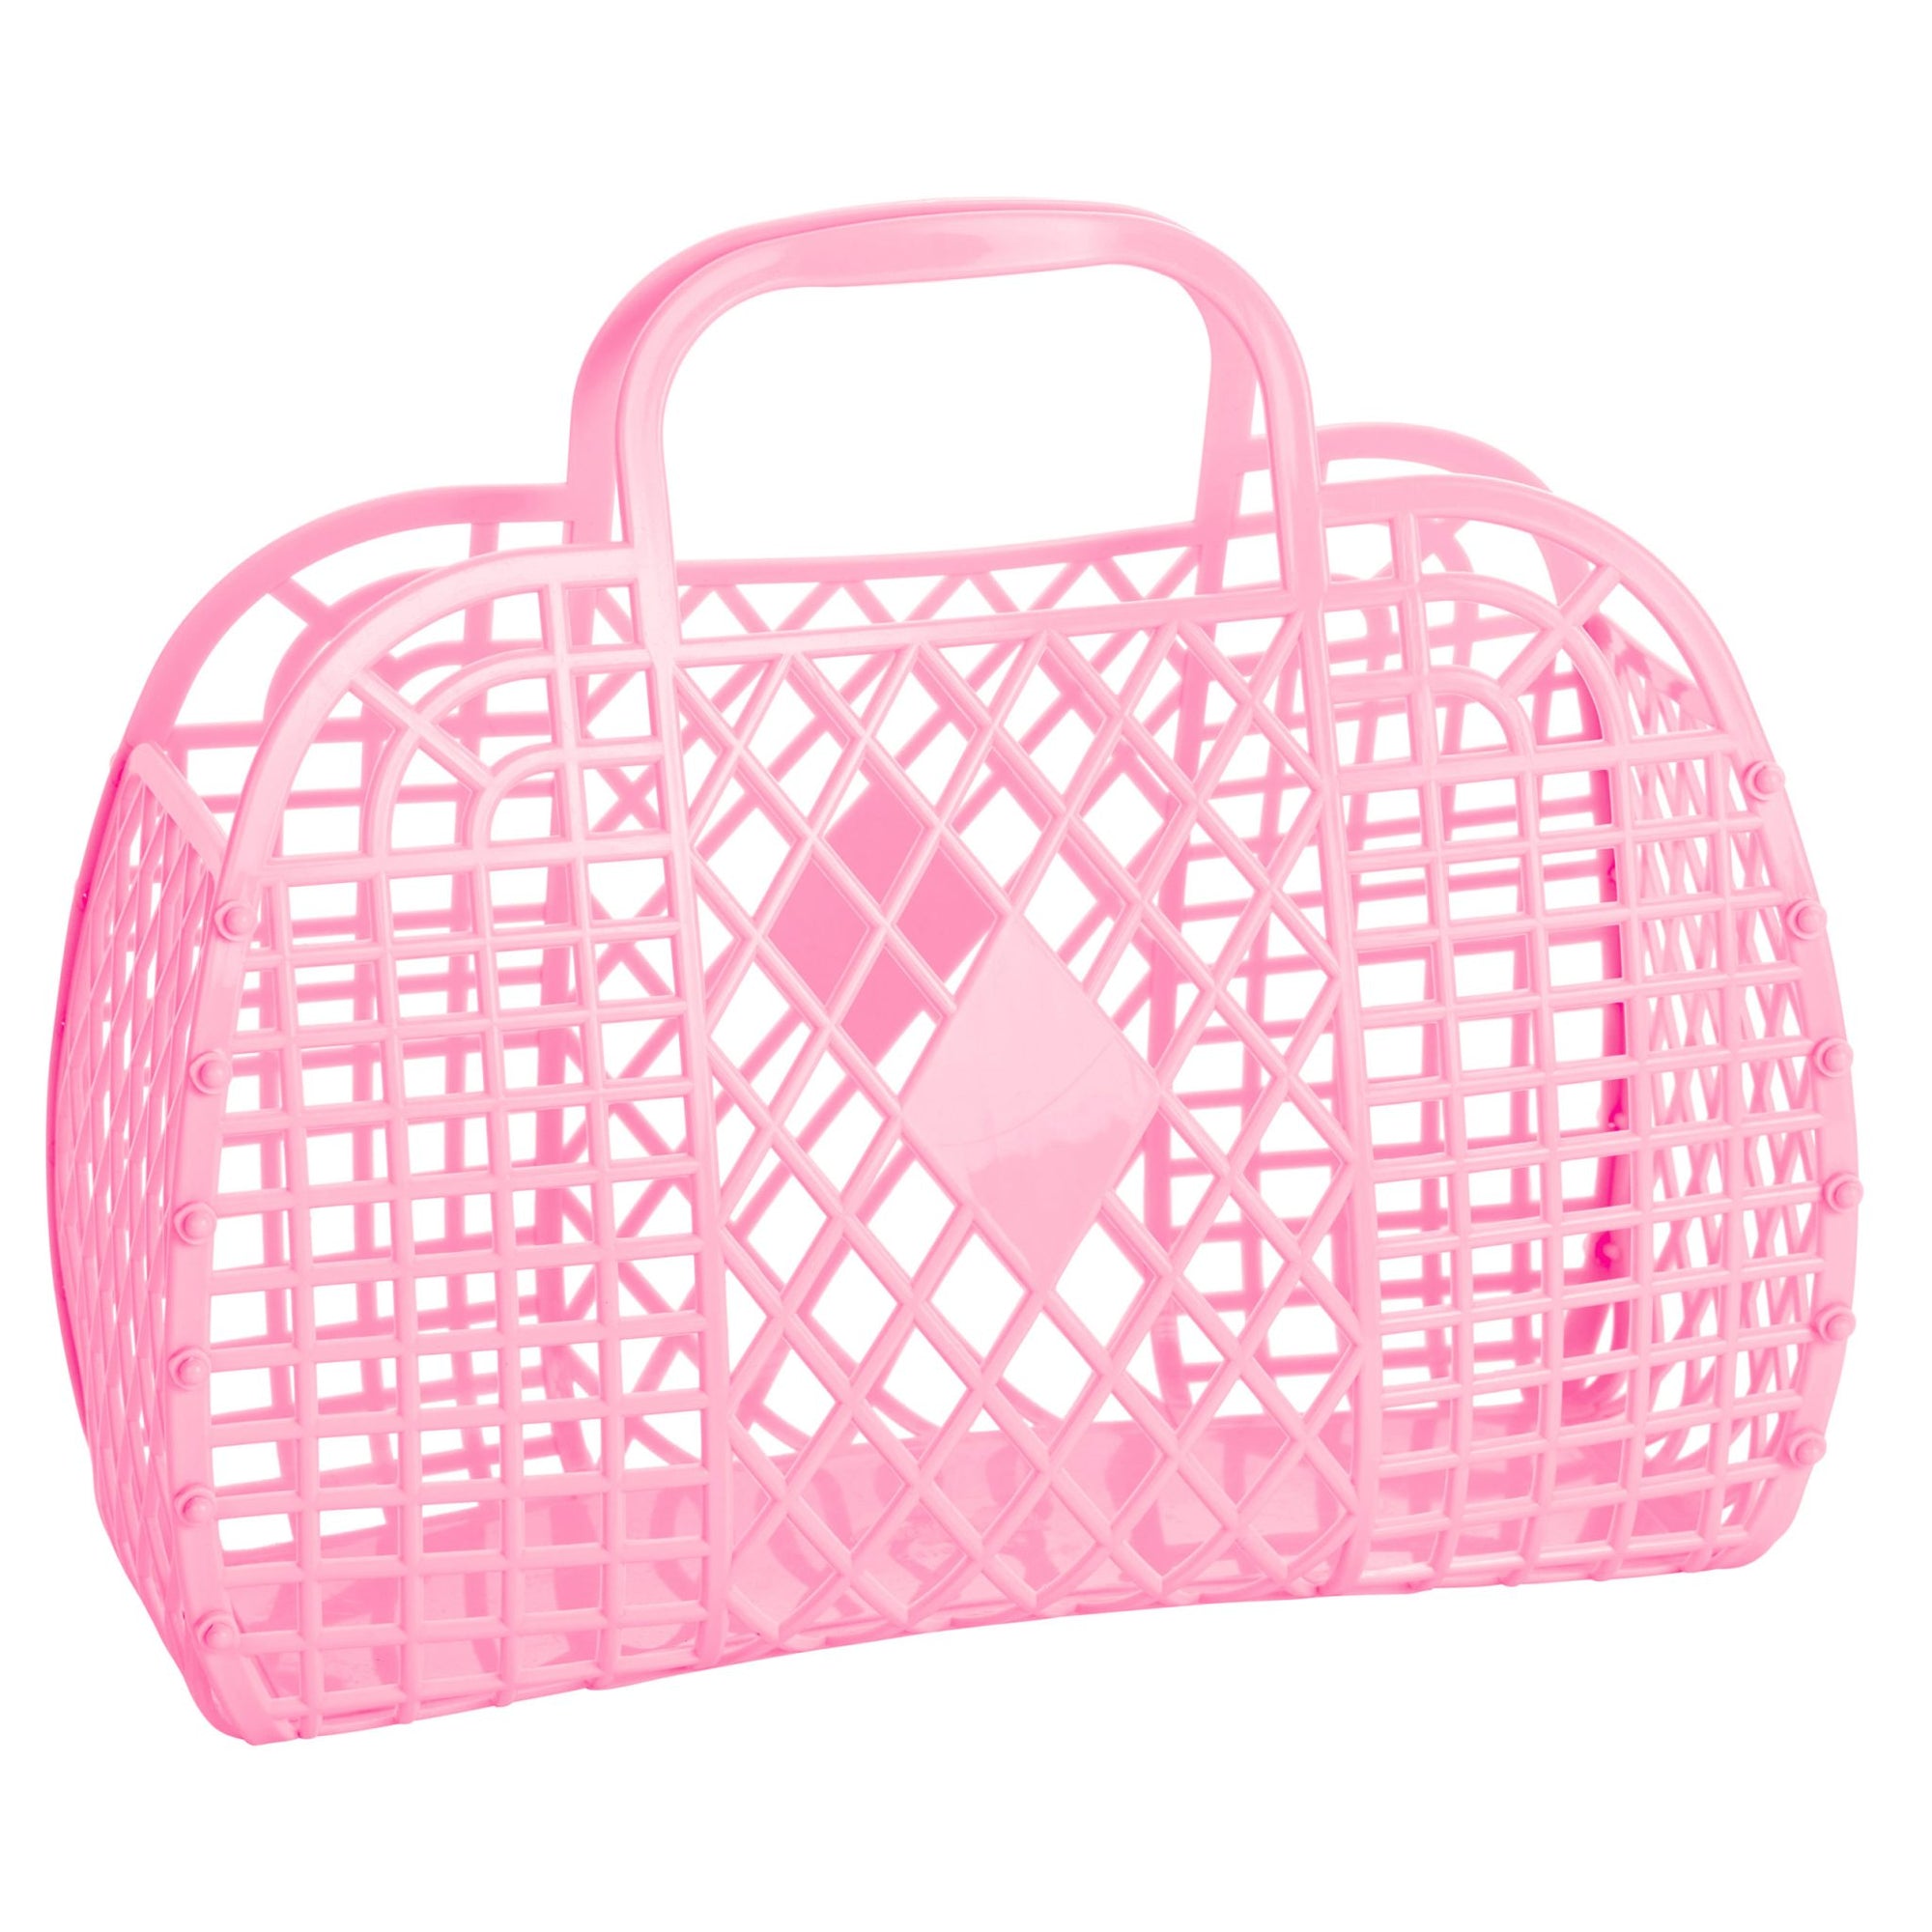 Sun Jellies Large Retro Basket in Bubblegum Pink